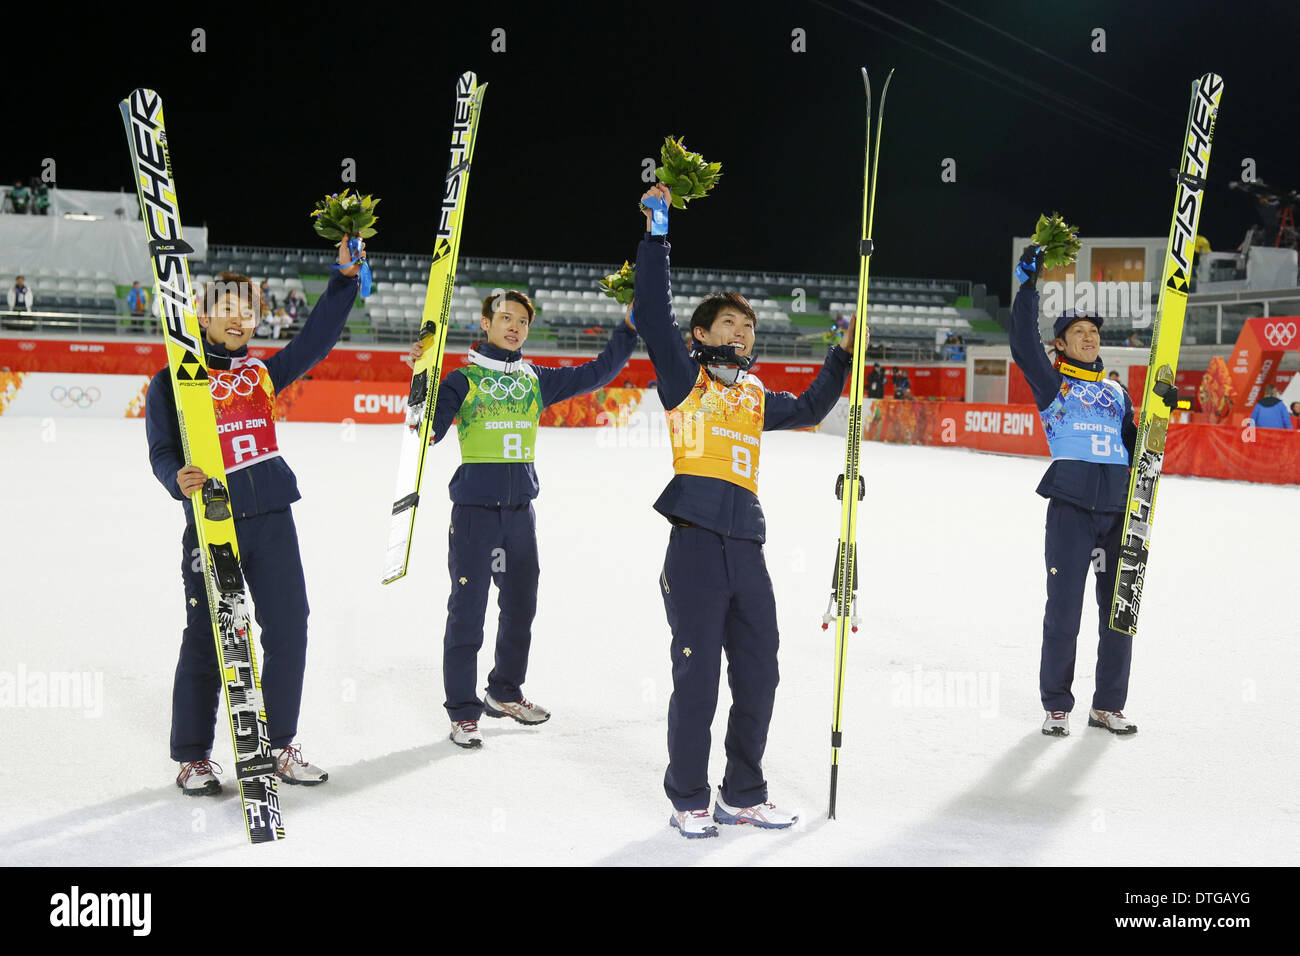 Sochi, Russia. 17th Feb, 2014. (L-R) Reruhi Shimizu, Taku Takeuchi, Daiki  Ito, Noriaki Kasai, (JPN) Ski Jumping : Men's Team Large Hill at RUSSKI  GORKI Jumping Center during the Sochi 2014 Olympic